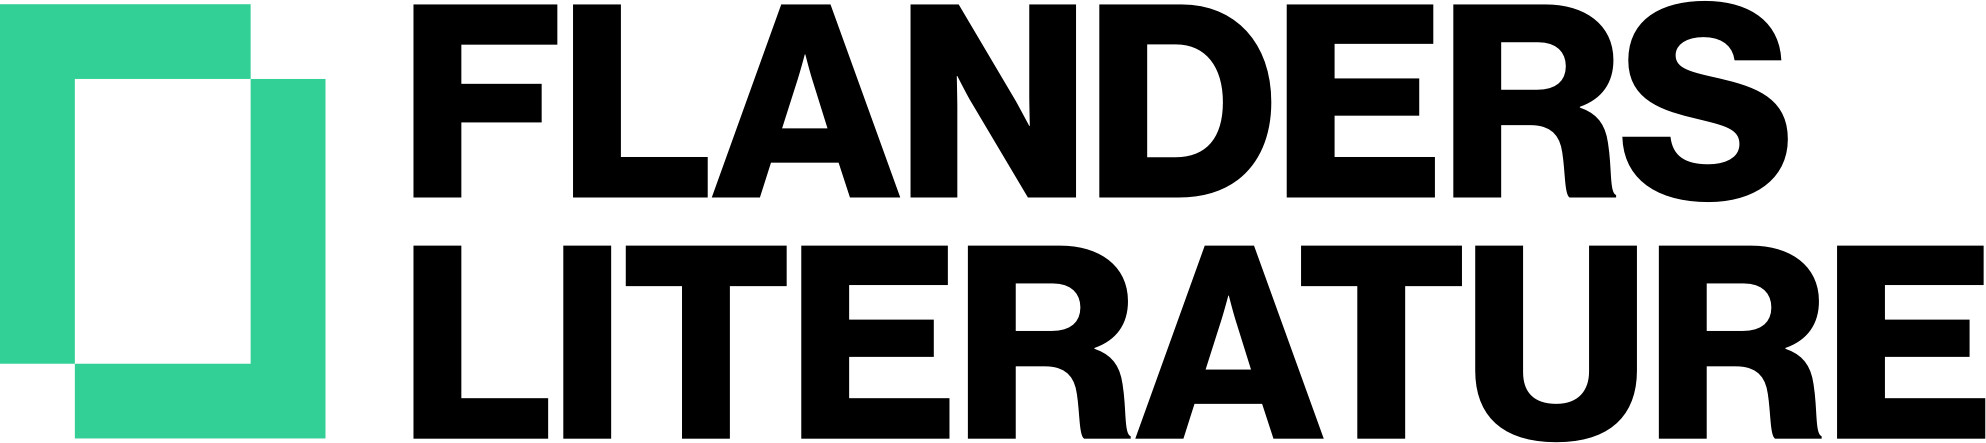 Flanders Literature Logo PNG image